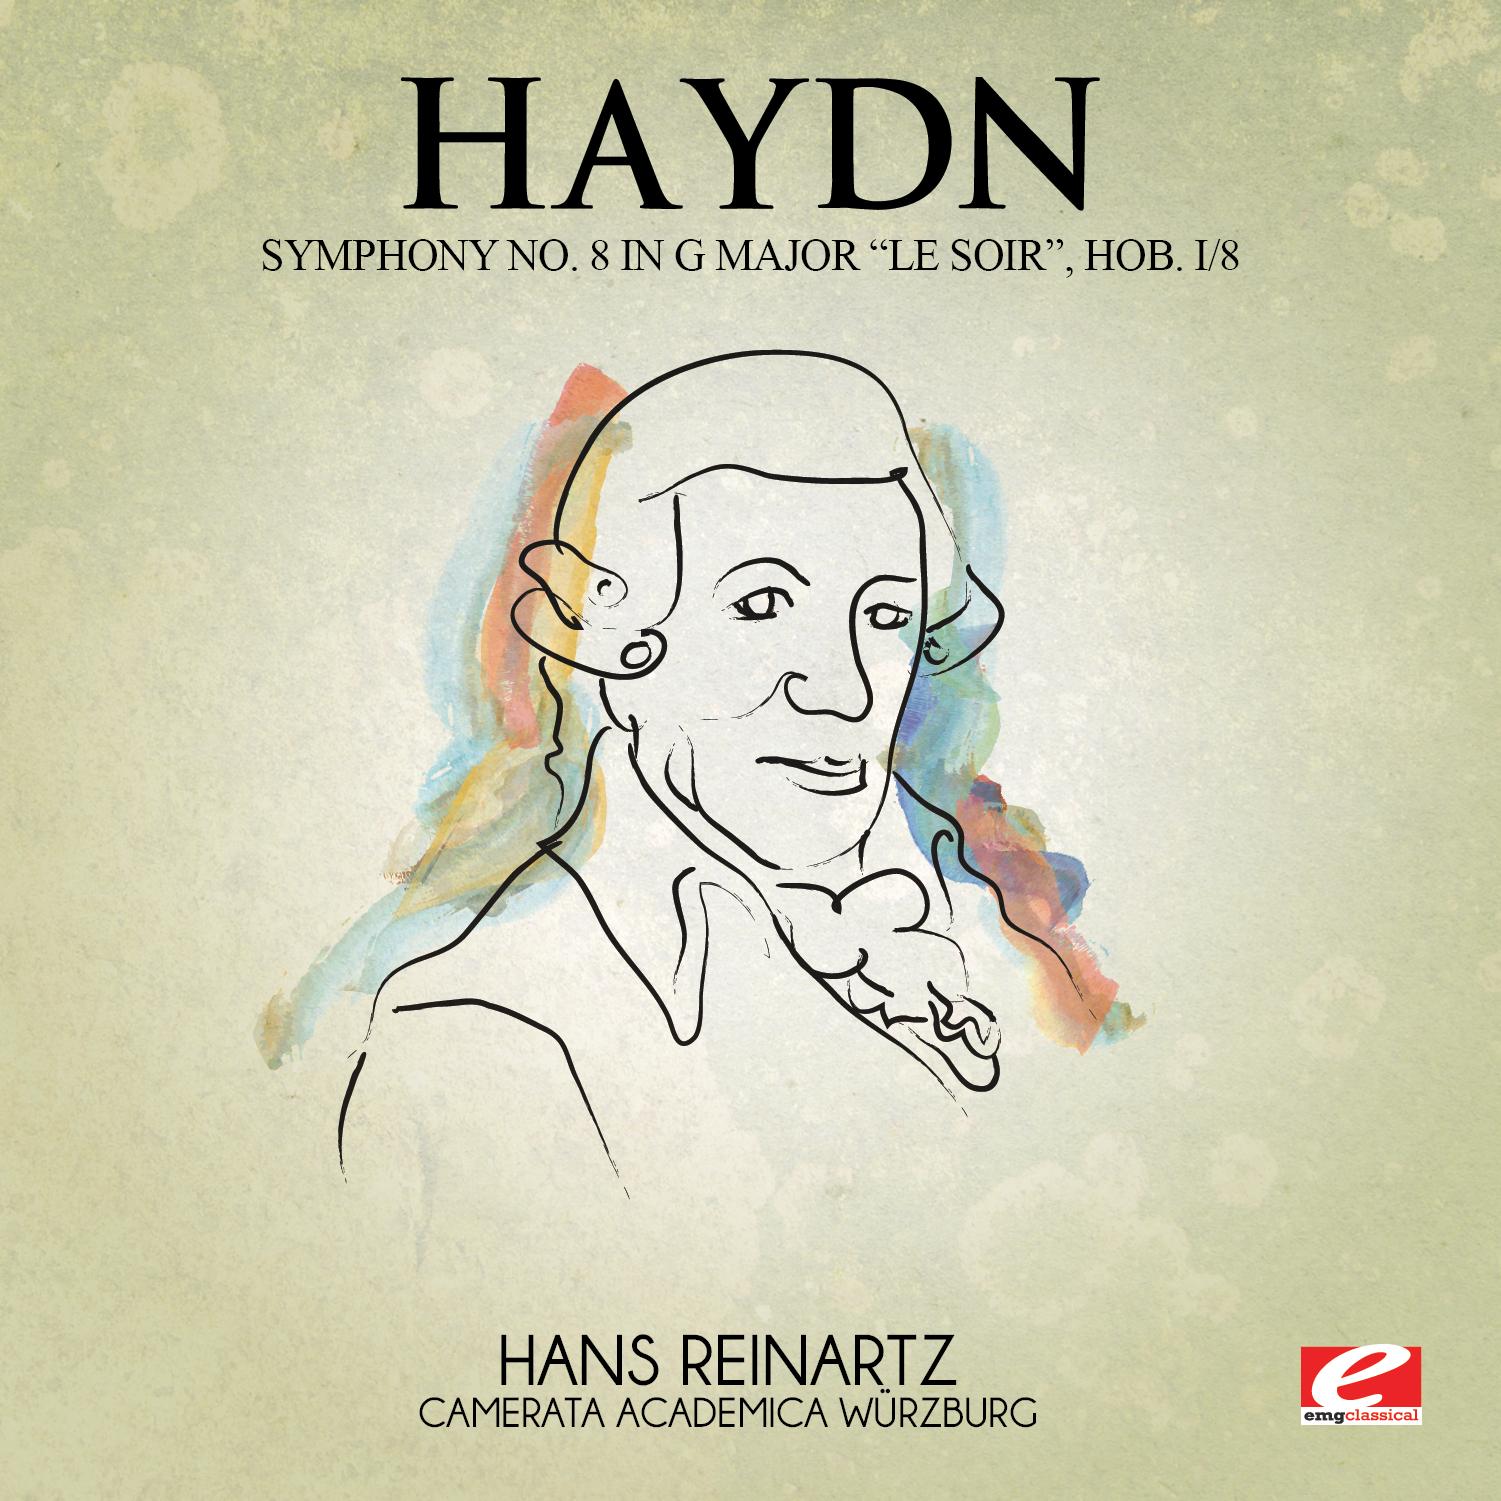 Haydn: Symphony No. 8 in G Major "Le soir", Hob. I/8 (Digitally Remastered)